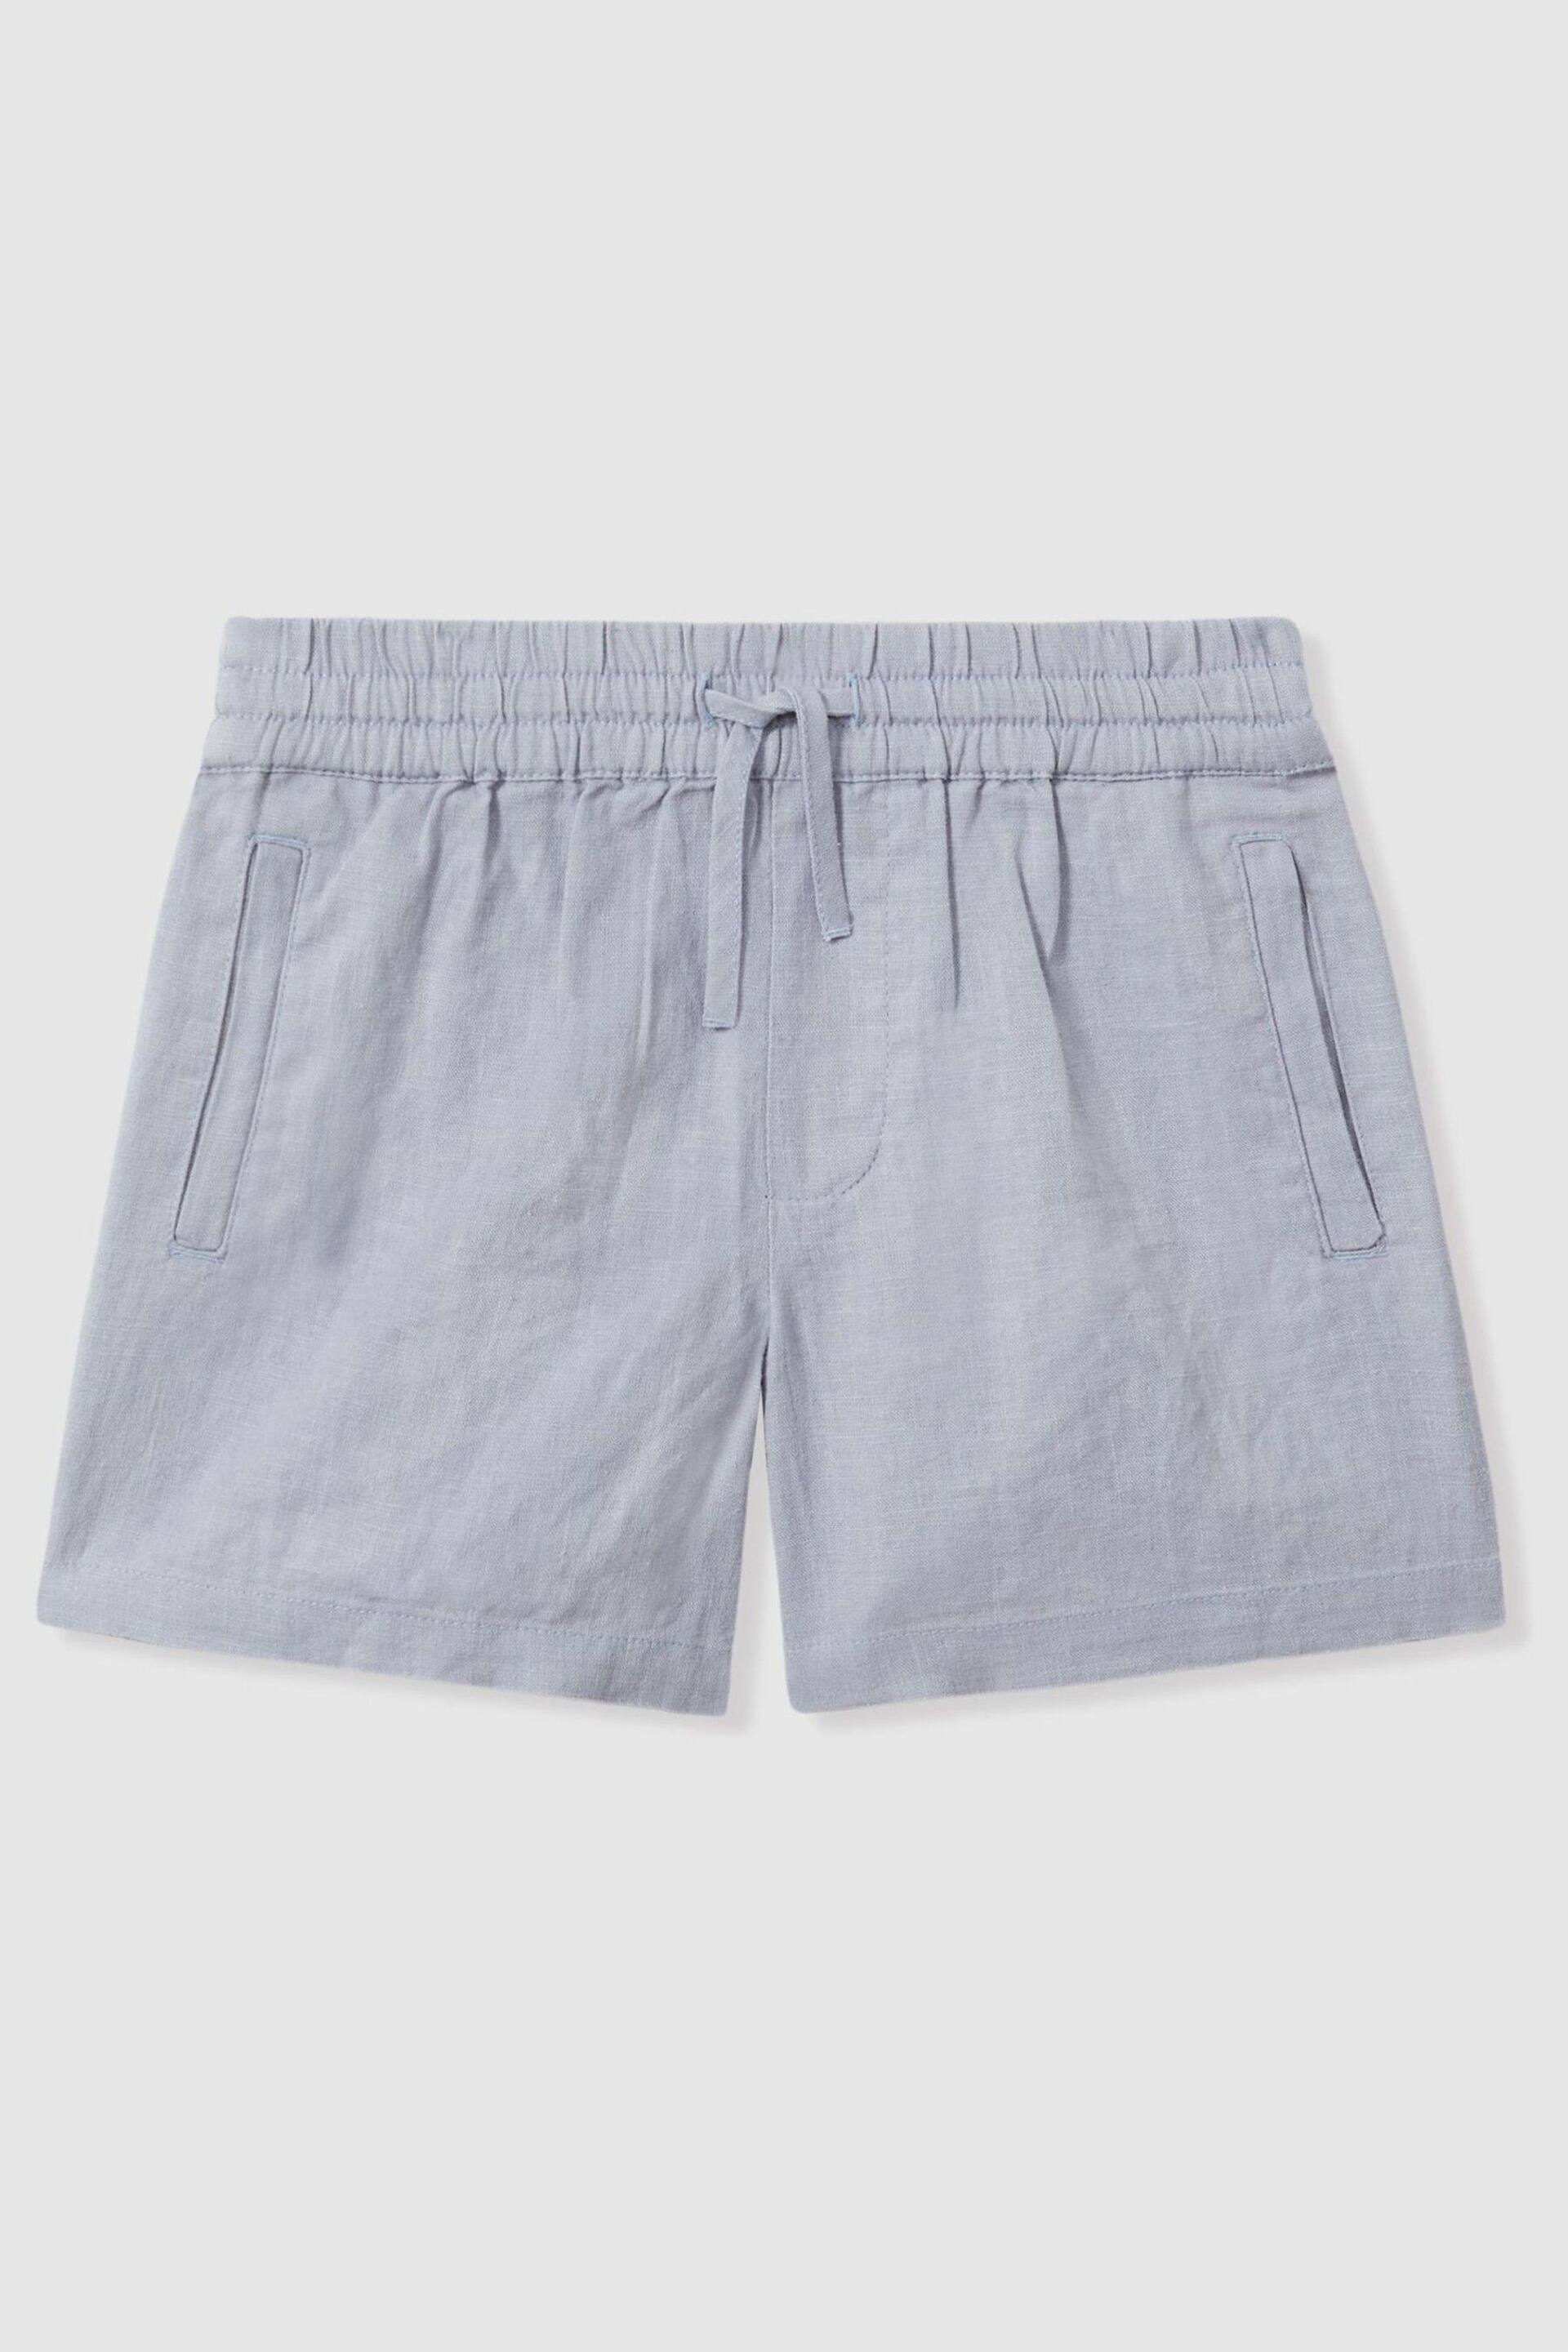 Reiss Soft Blue Acen Teen Linen Drawstring Shorts - Image 1 of 3